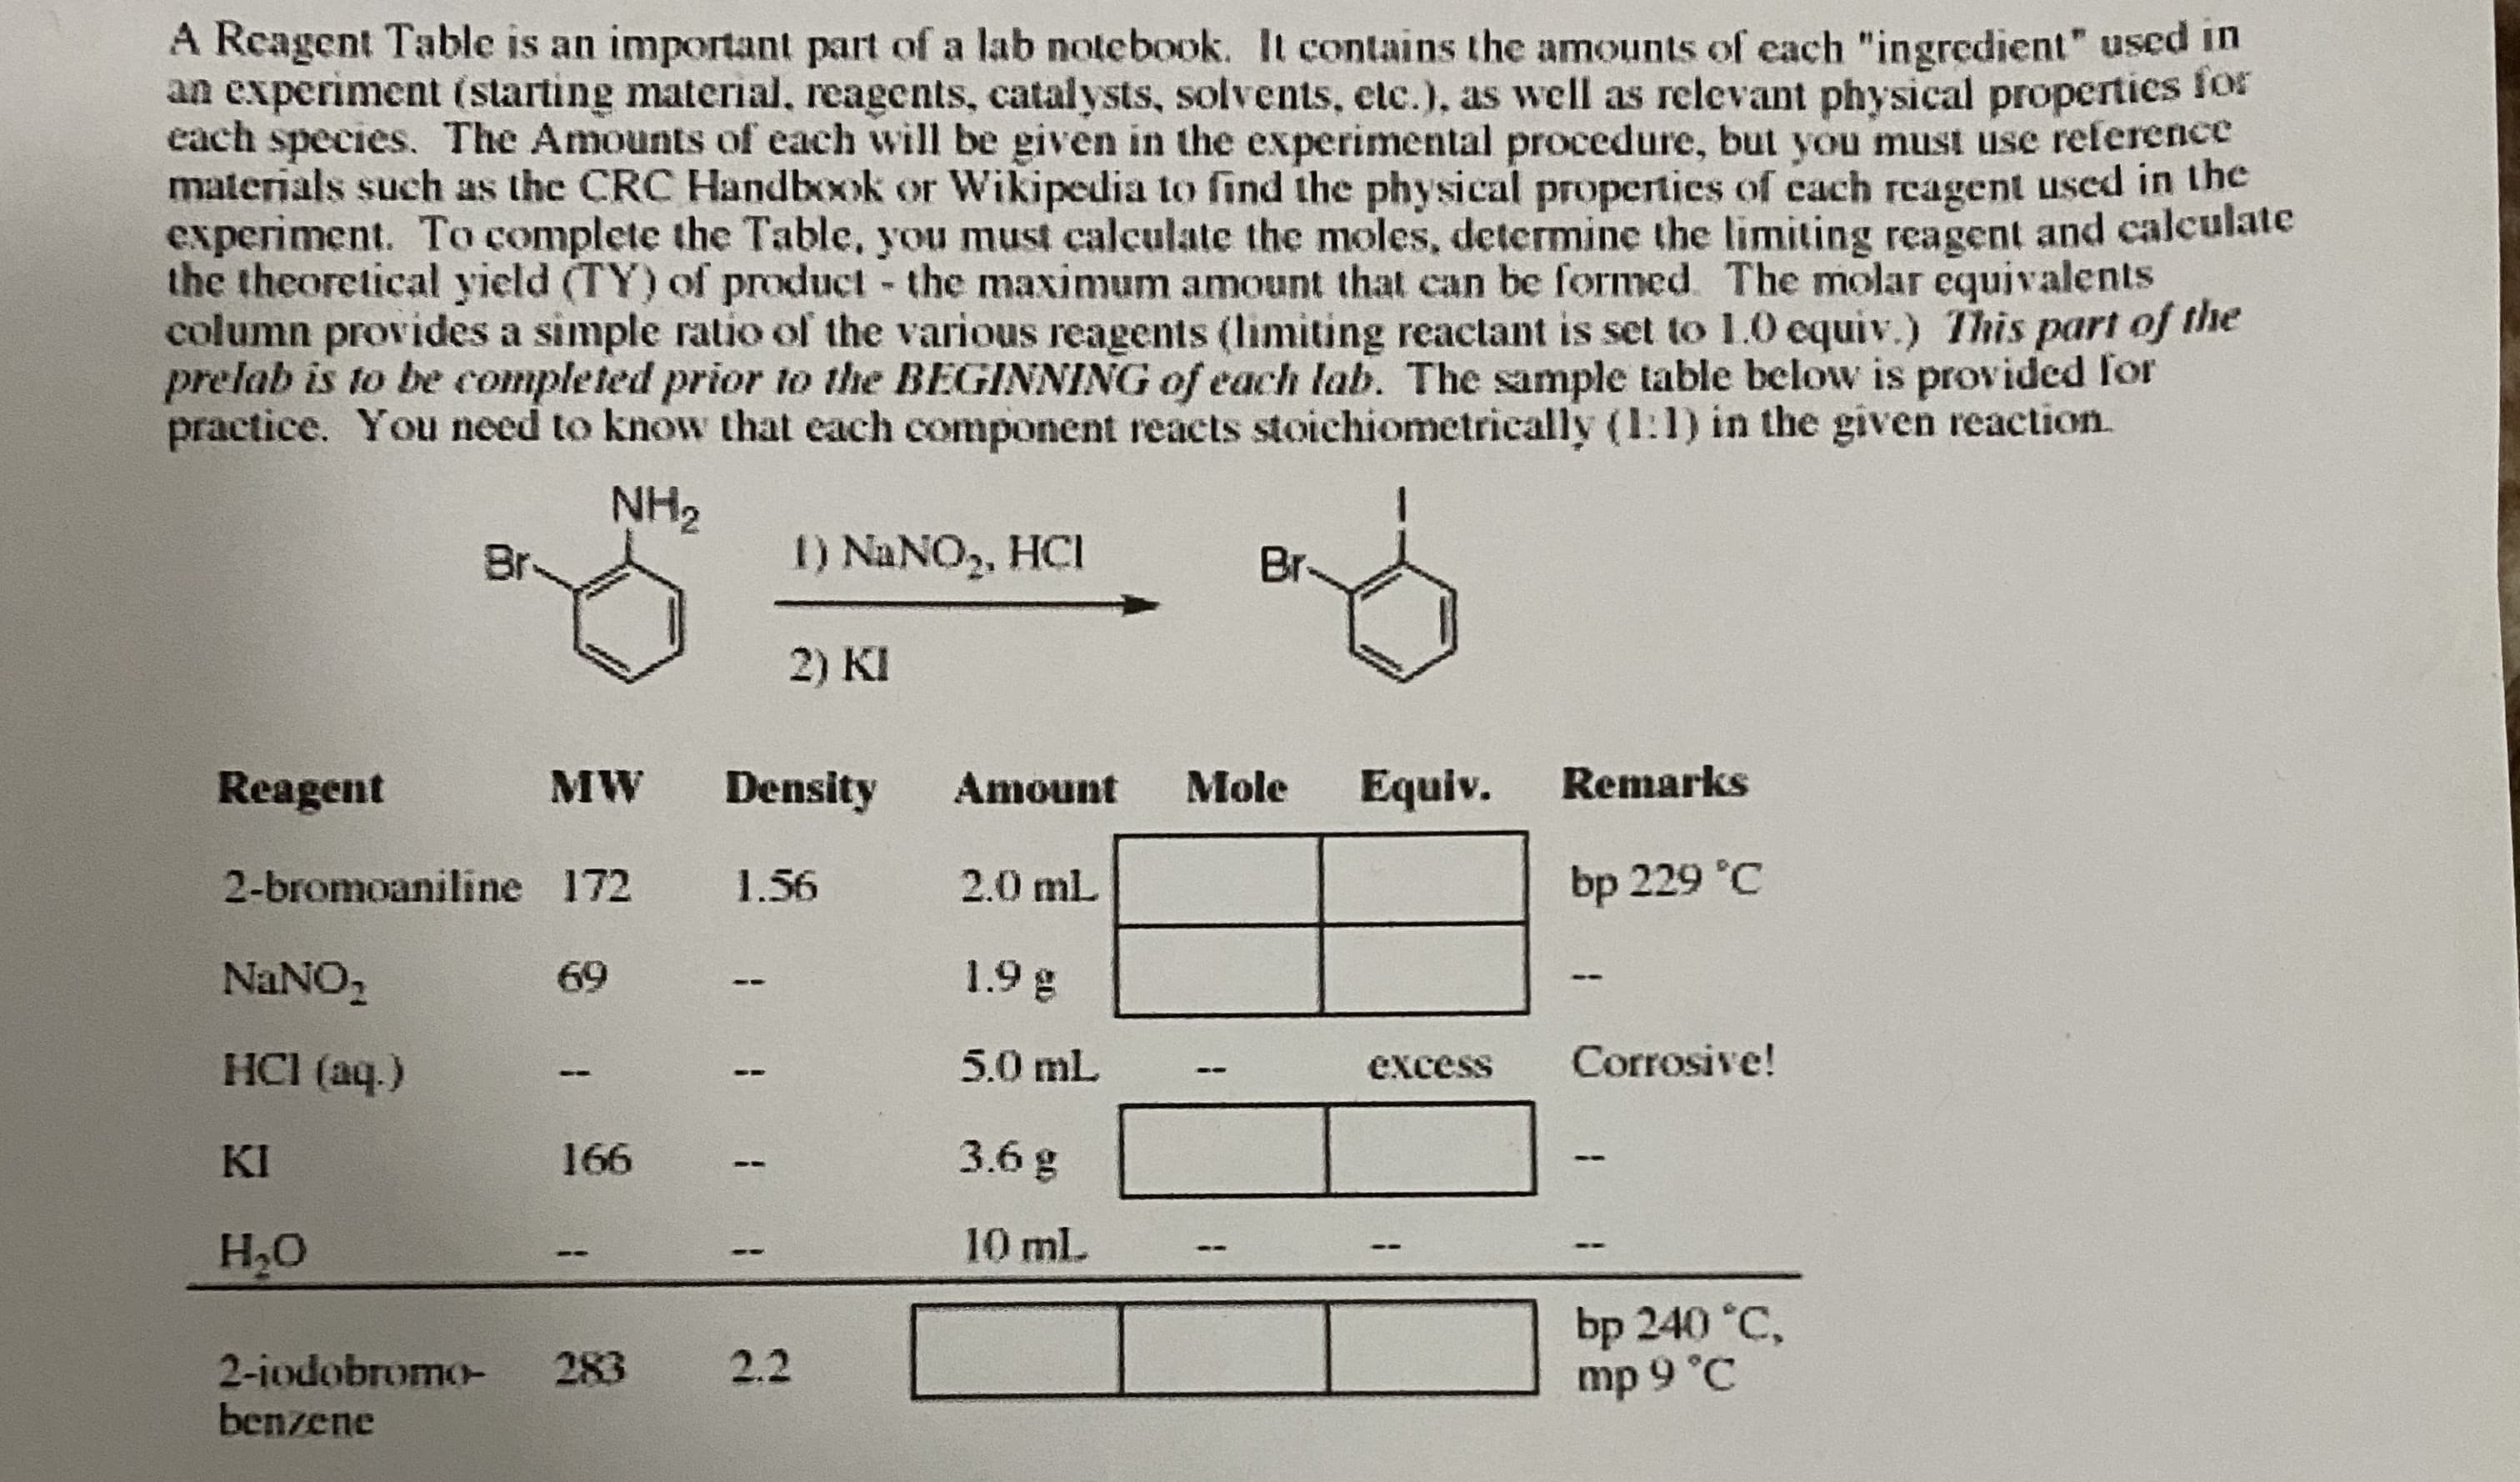 NH2
Br-
1) NANO,, HCI
Br
2) KI
Reagent
MW
Density
Amount
Mole
Equiv.
Remarks
2-bromoaniline 172
1.56
2.0 mL
bp 229 °C
NaNO,
69
1.9 g
--
--
HCI (aq.)
5.0 mL
Corrosive!
excess
--
KI
166
3.6 g
--
--
H20
10 ml.
--
--
bp 240 °C,
mp 9 °C
283
2.2
2-iodobromo-
benzene
